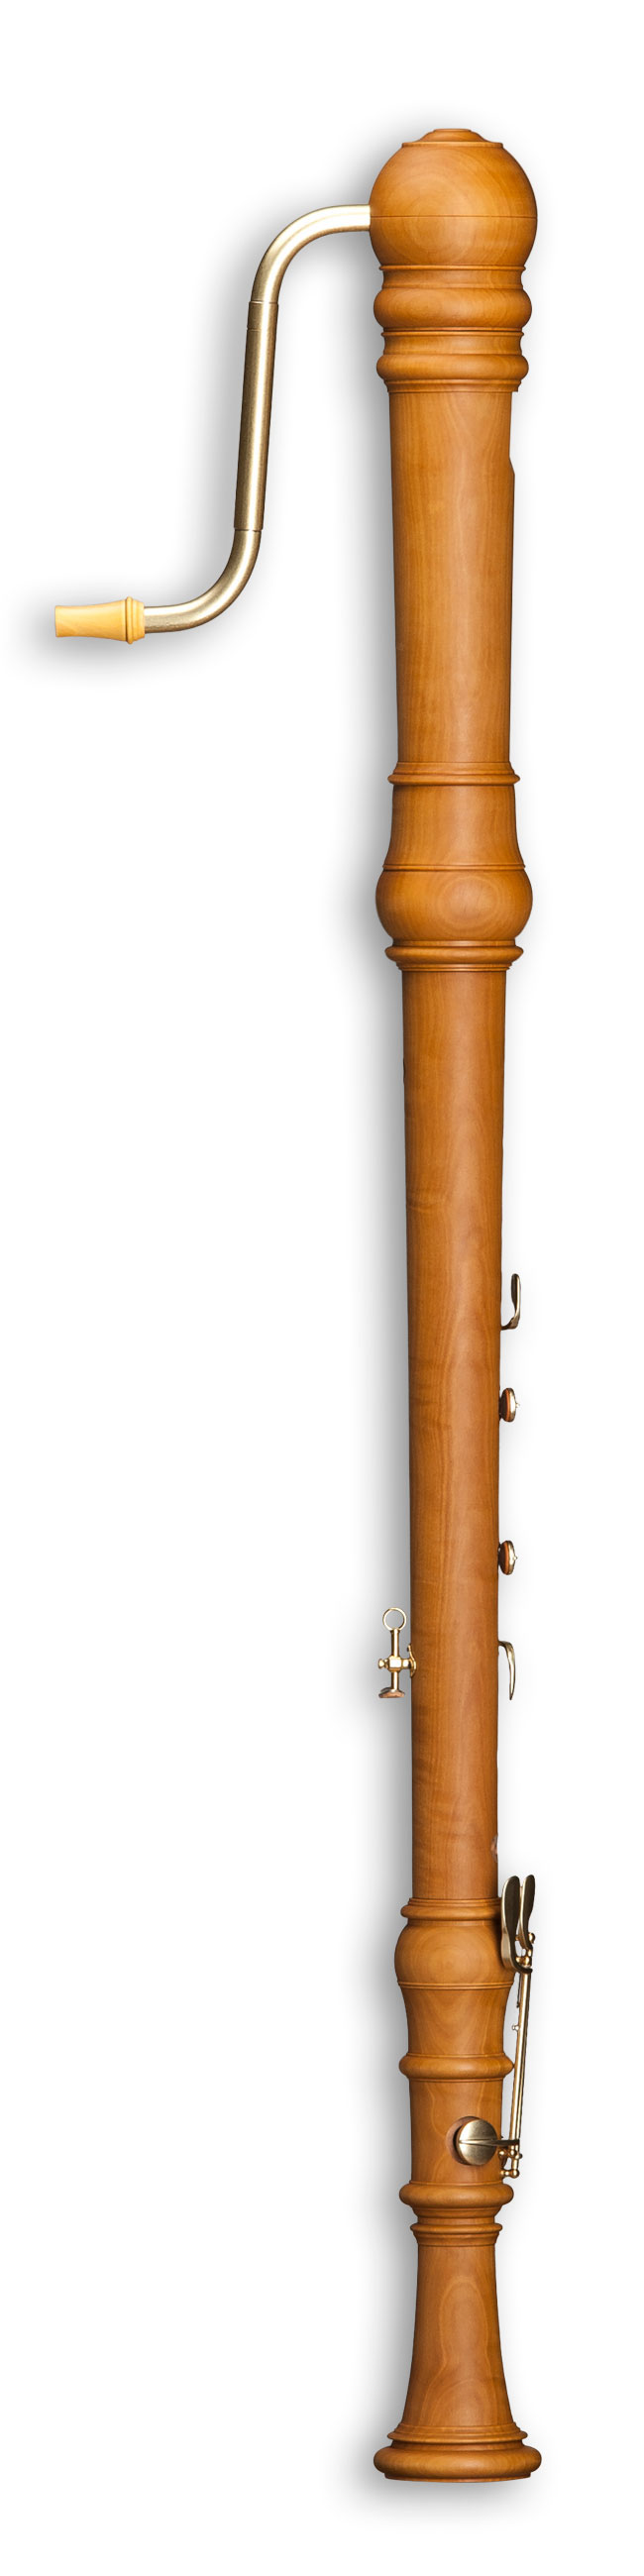 Mollenhauer 5506 Flûte à bec basse Denner poirier